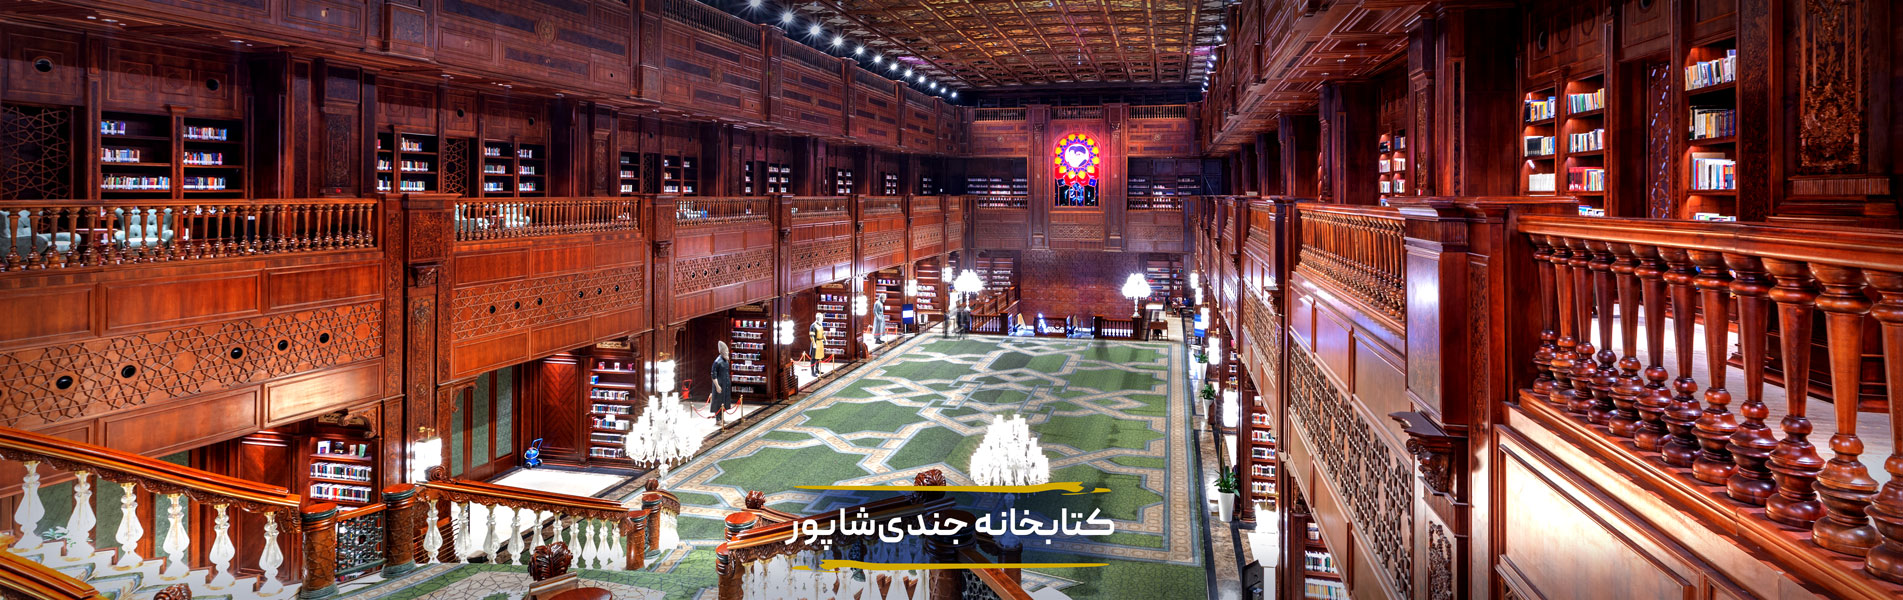 کتابخانه جندی شاپور